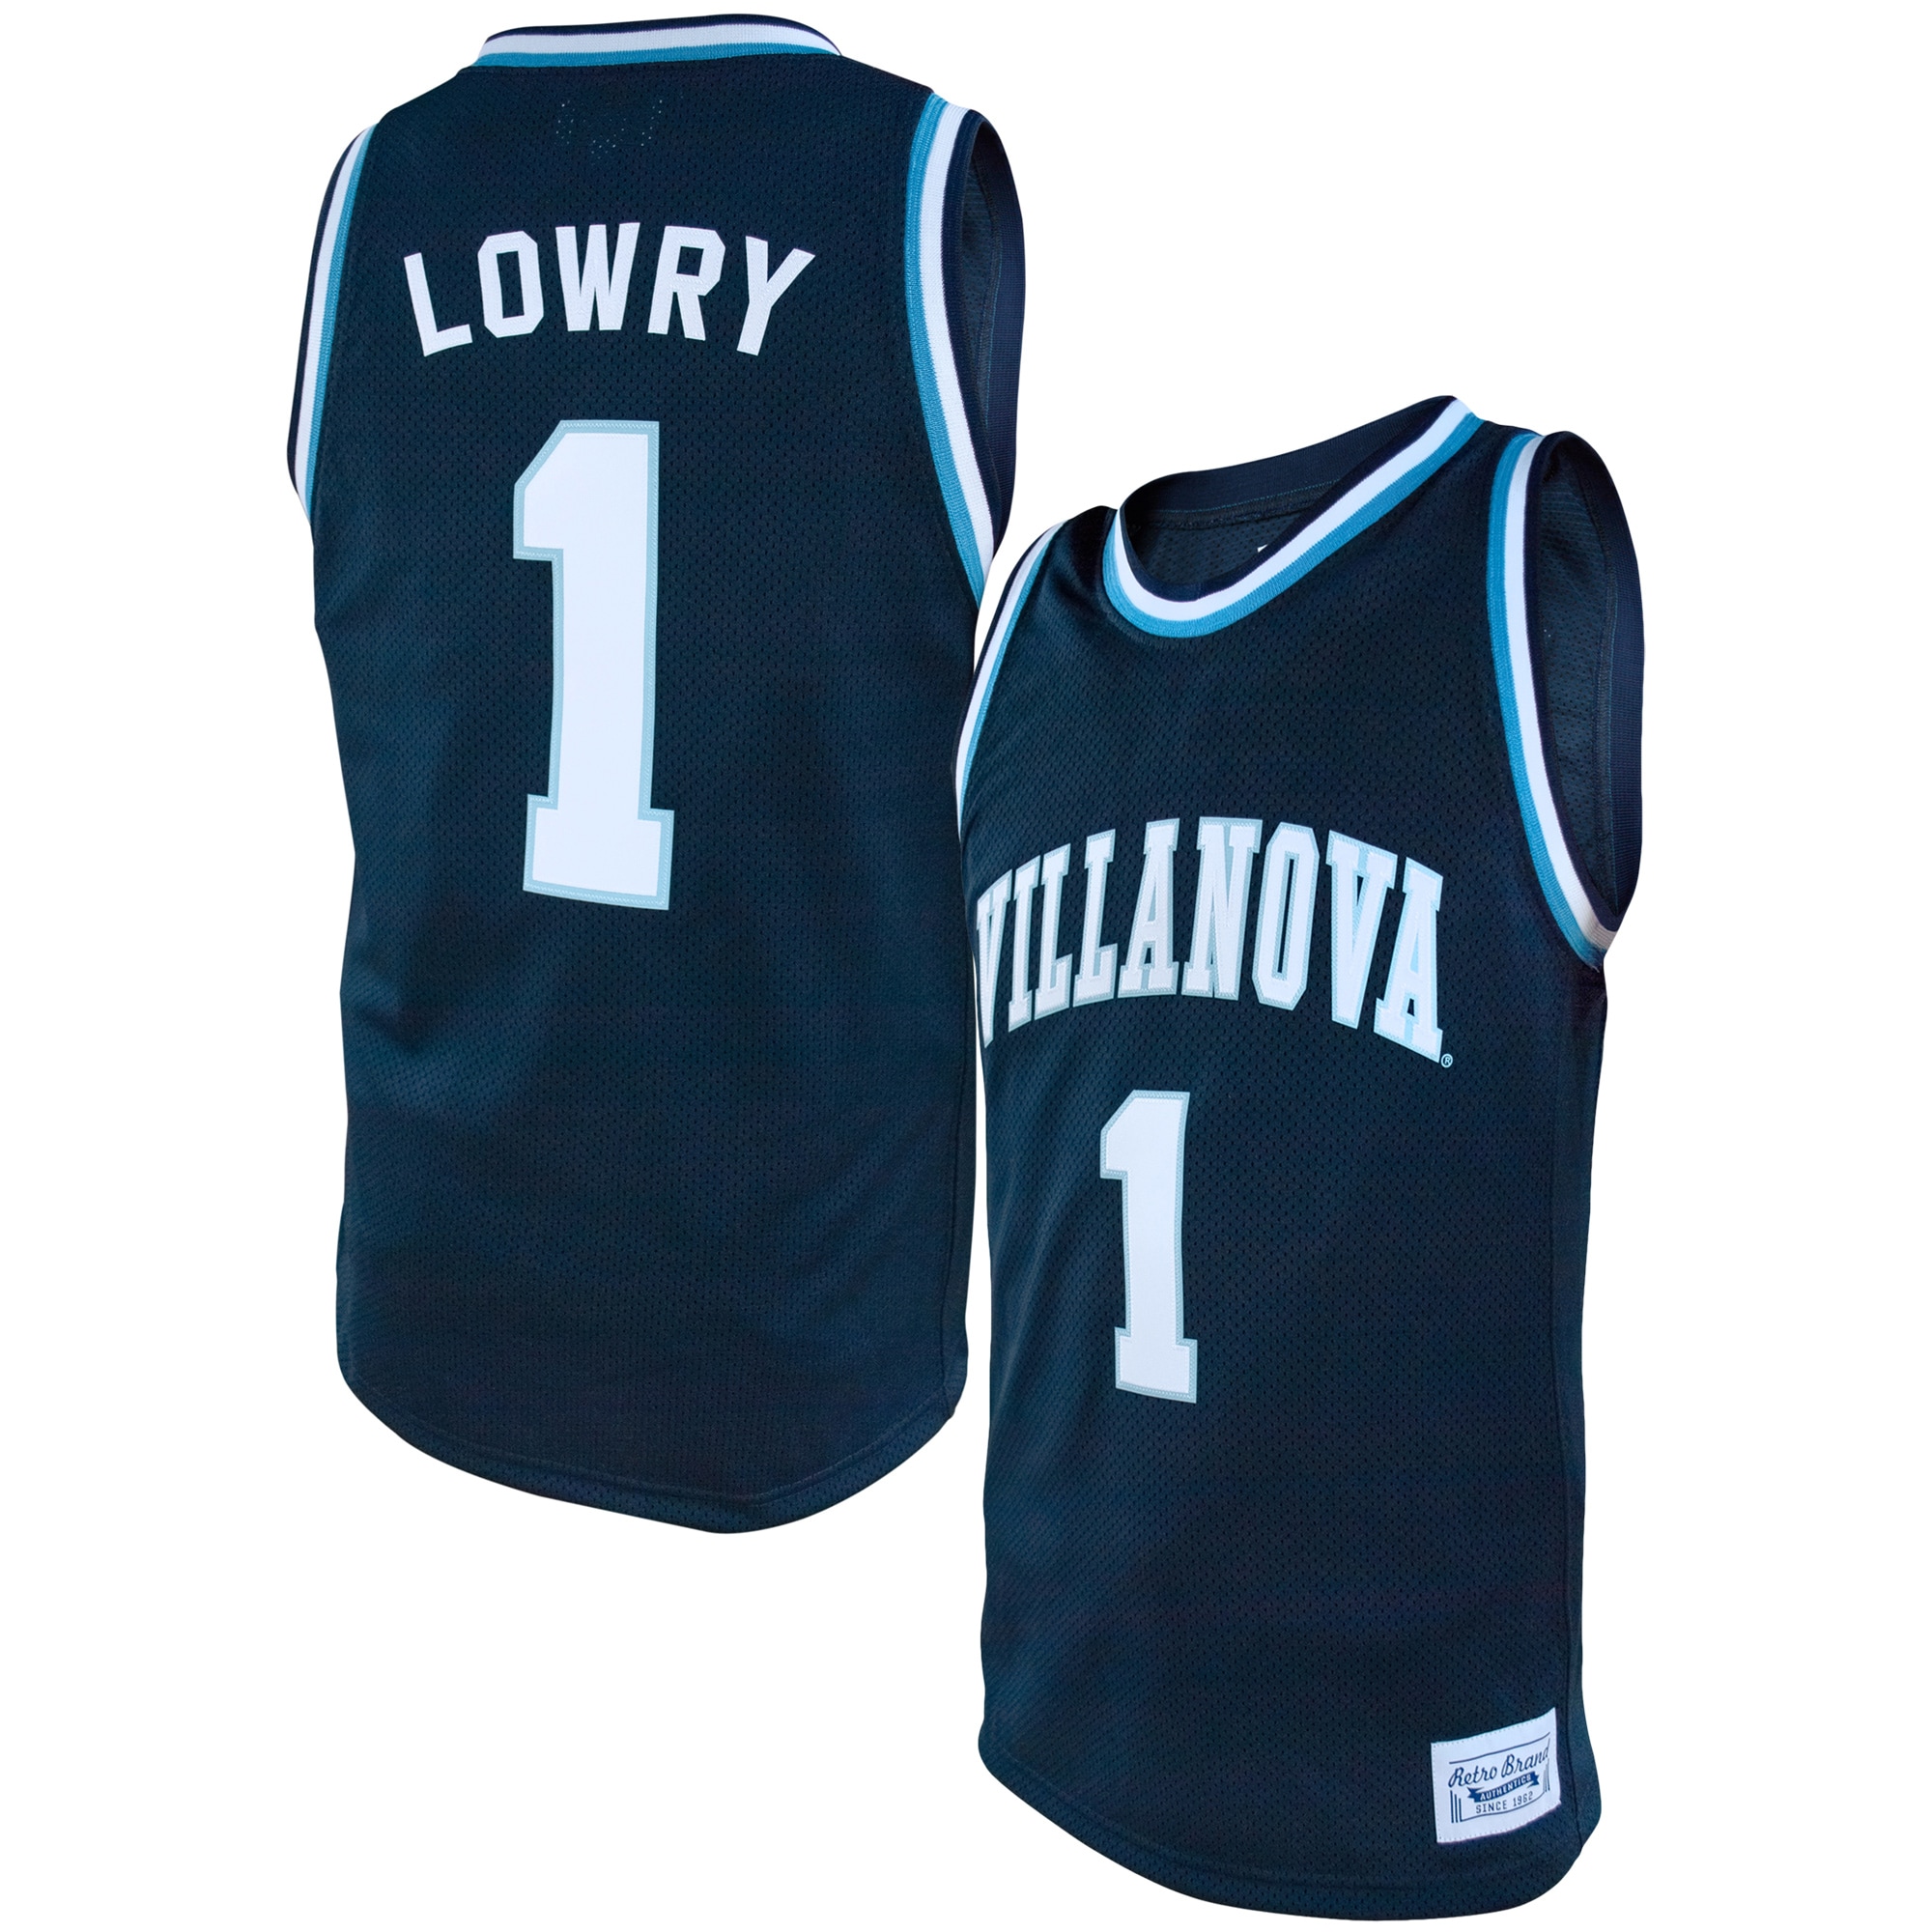 Kyle Lowry Villanova Wildcats Original Retro Brand Alumni Basketball Jersey - Navy For Youth Women Men